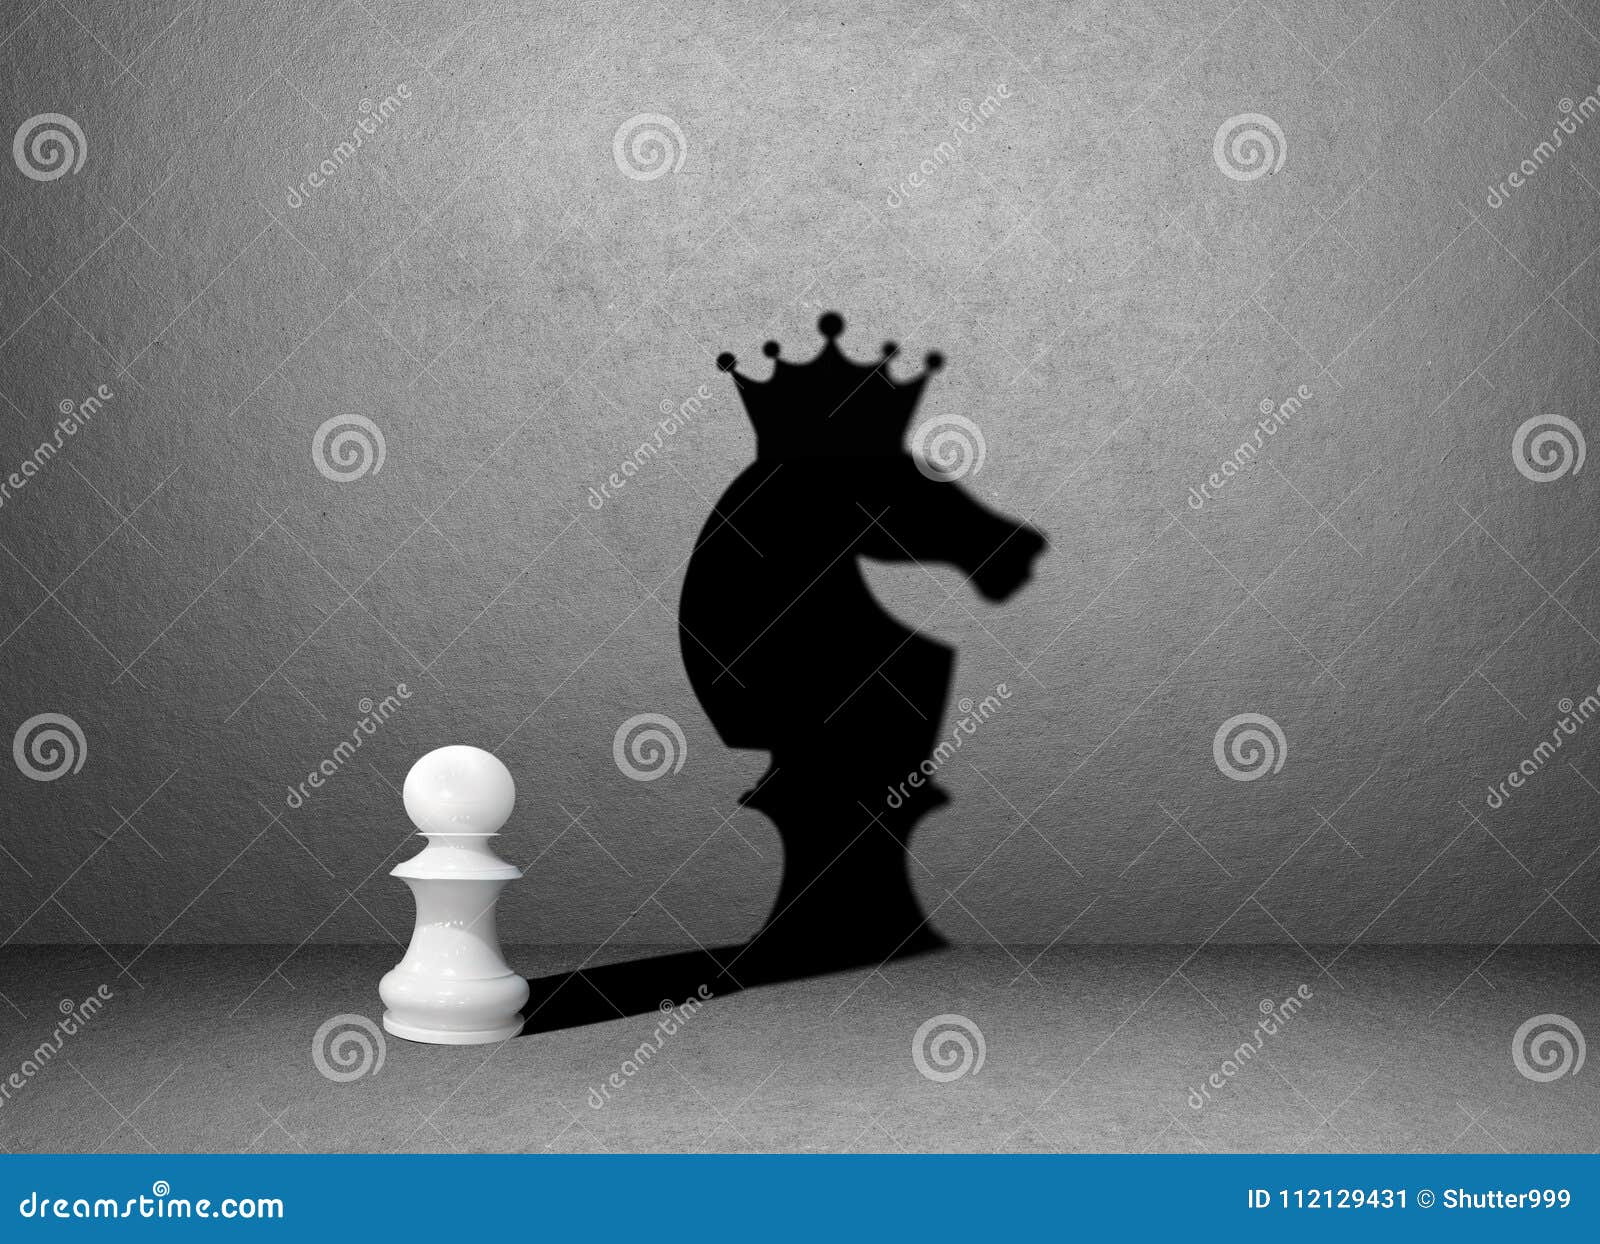 horse chess shadow on wall, winner